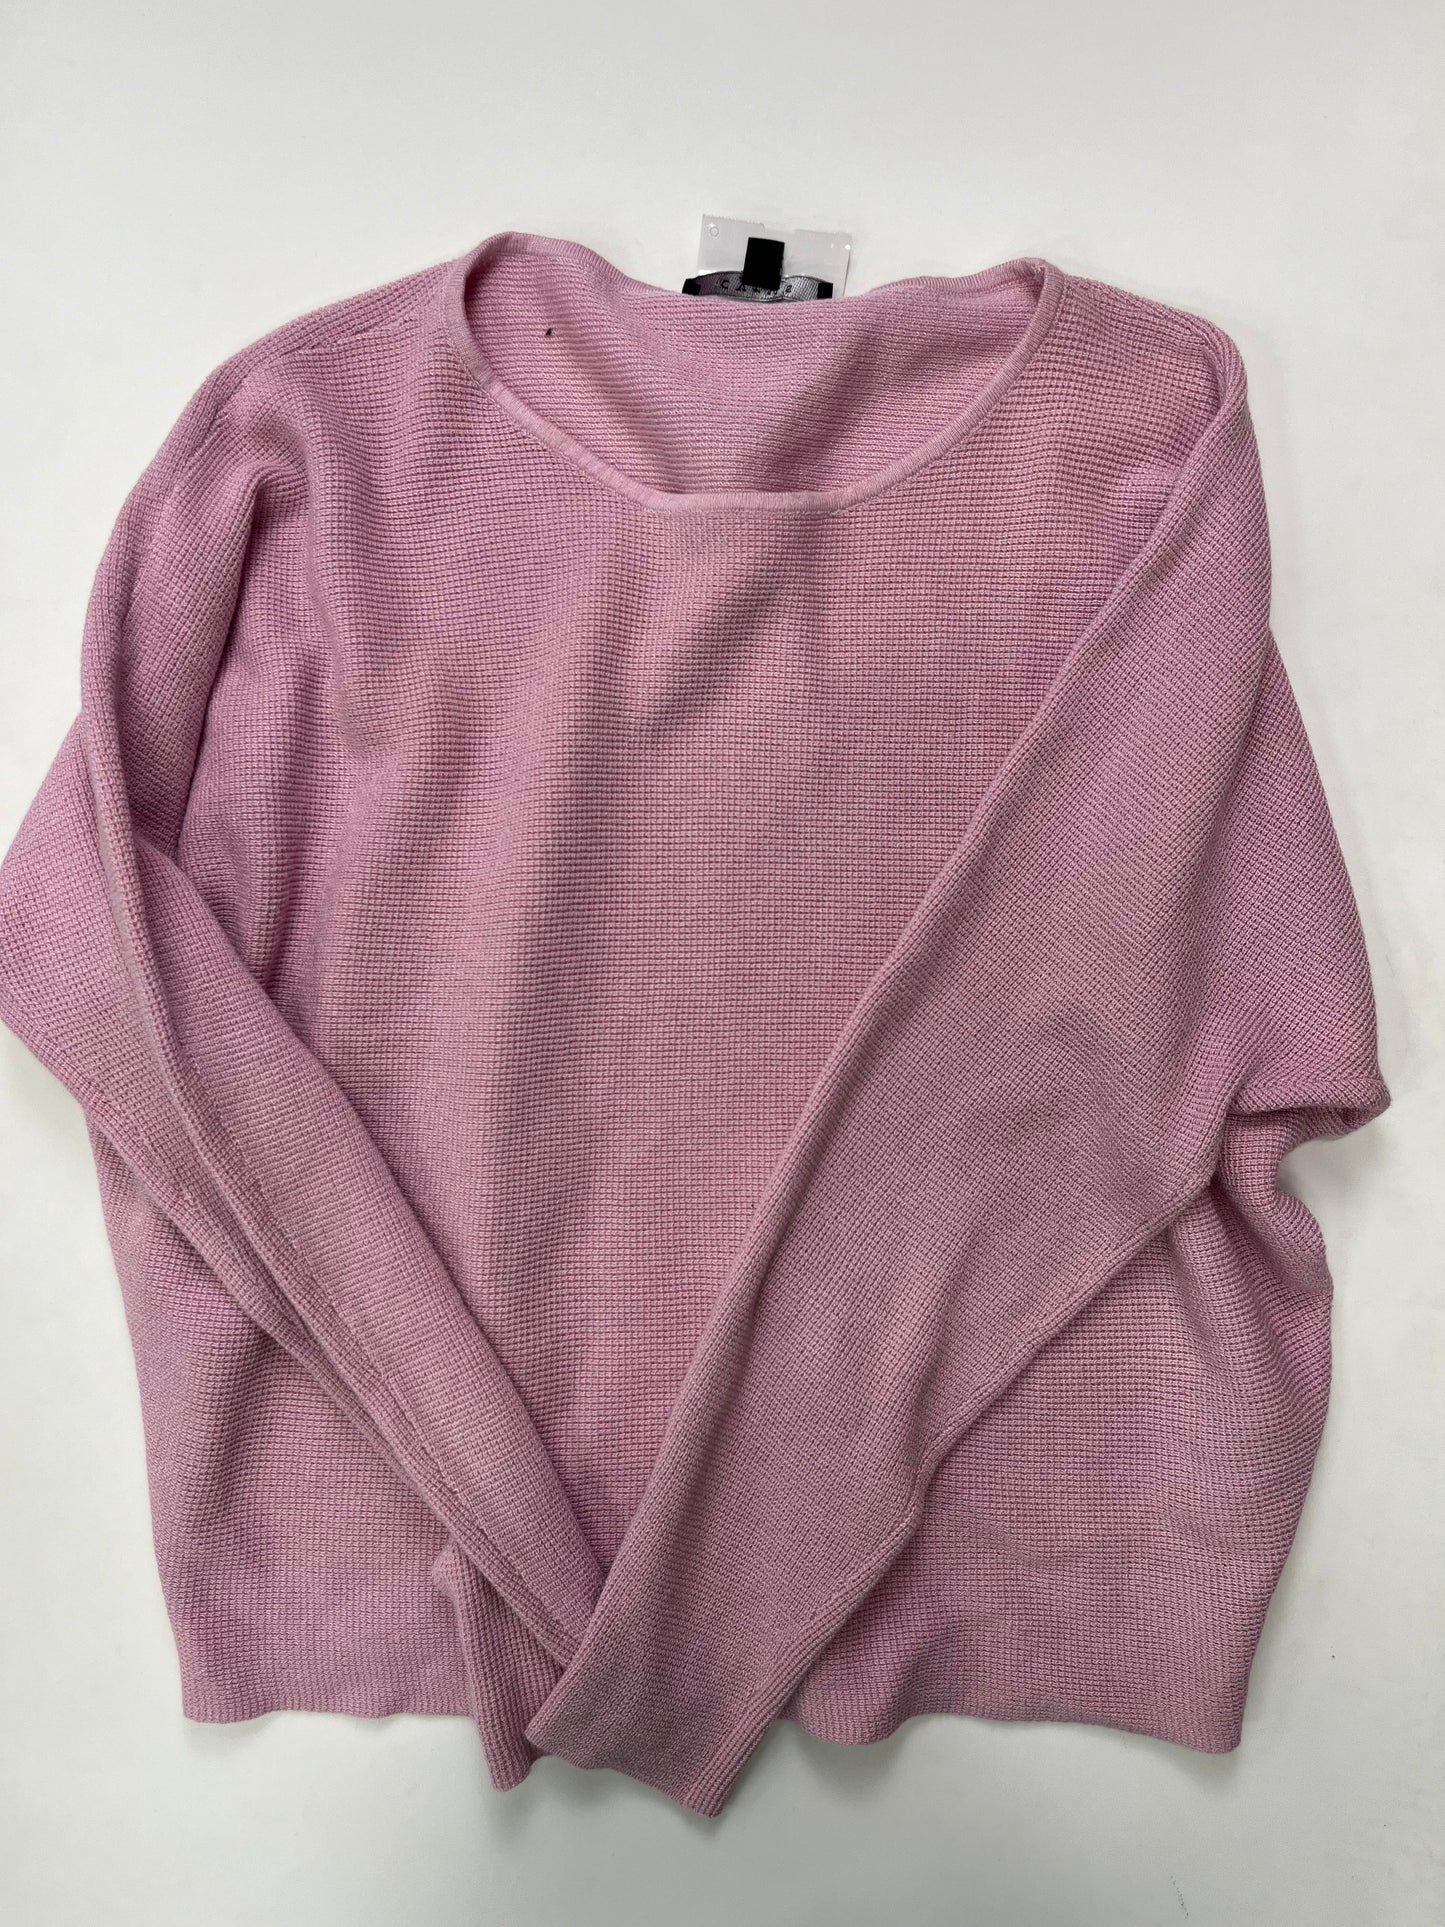 Sweater By Cyrus Knits  Size: L